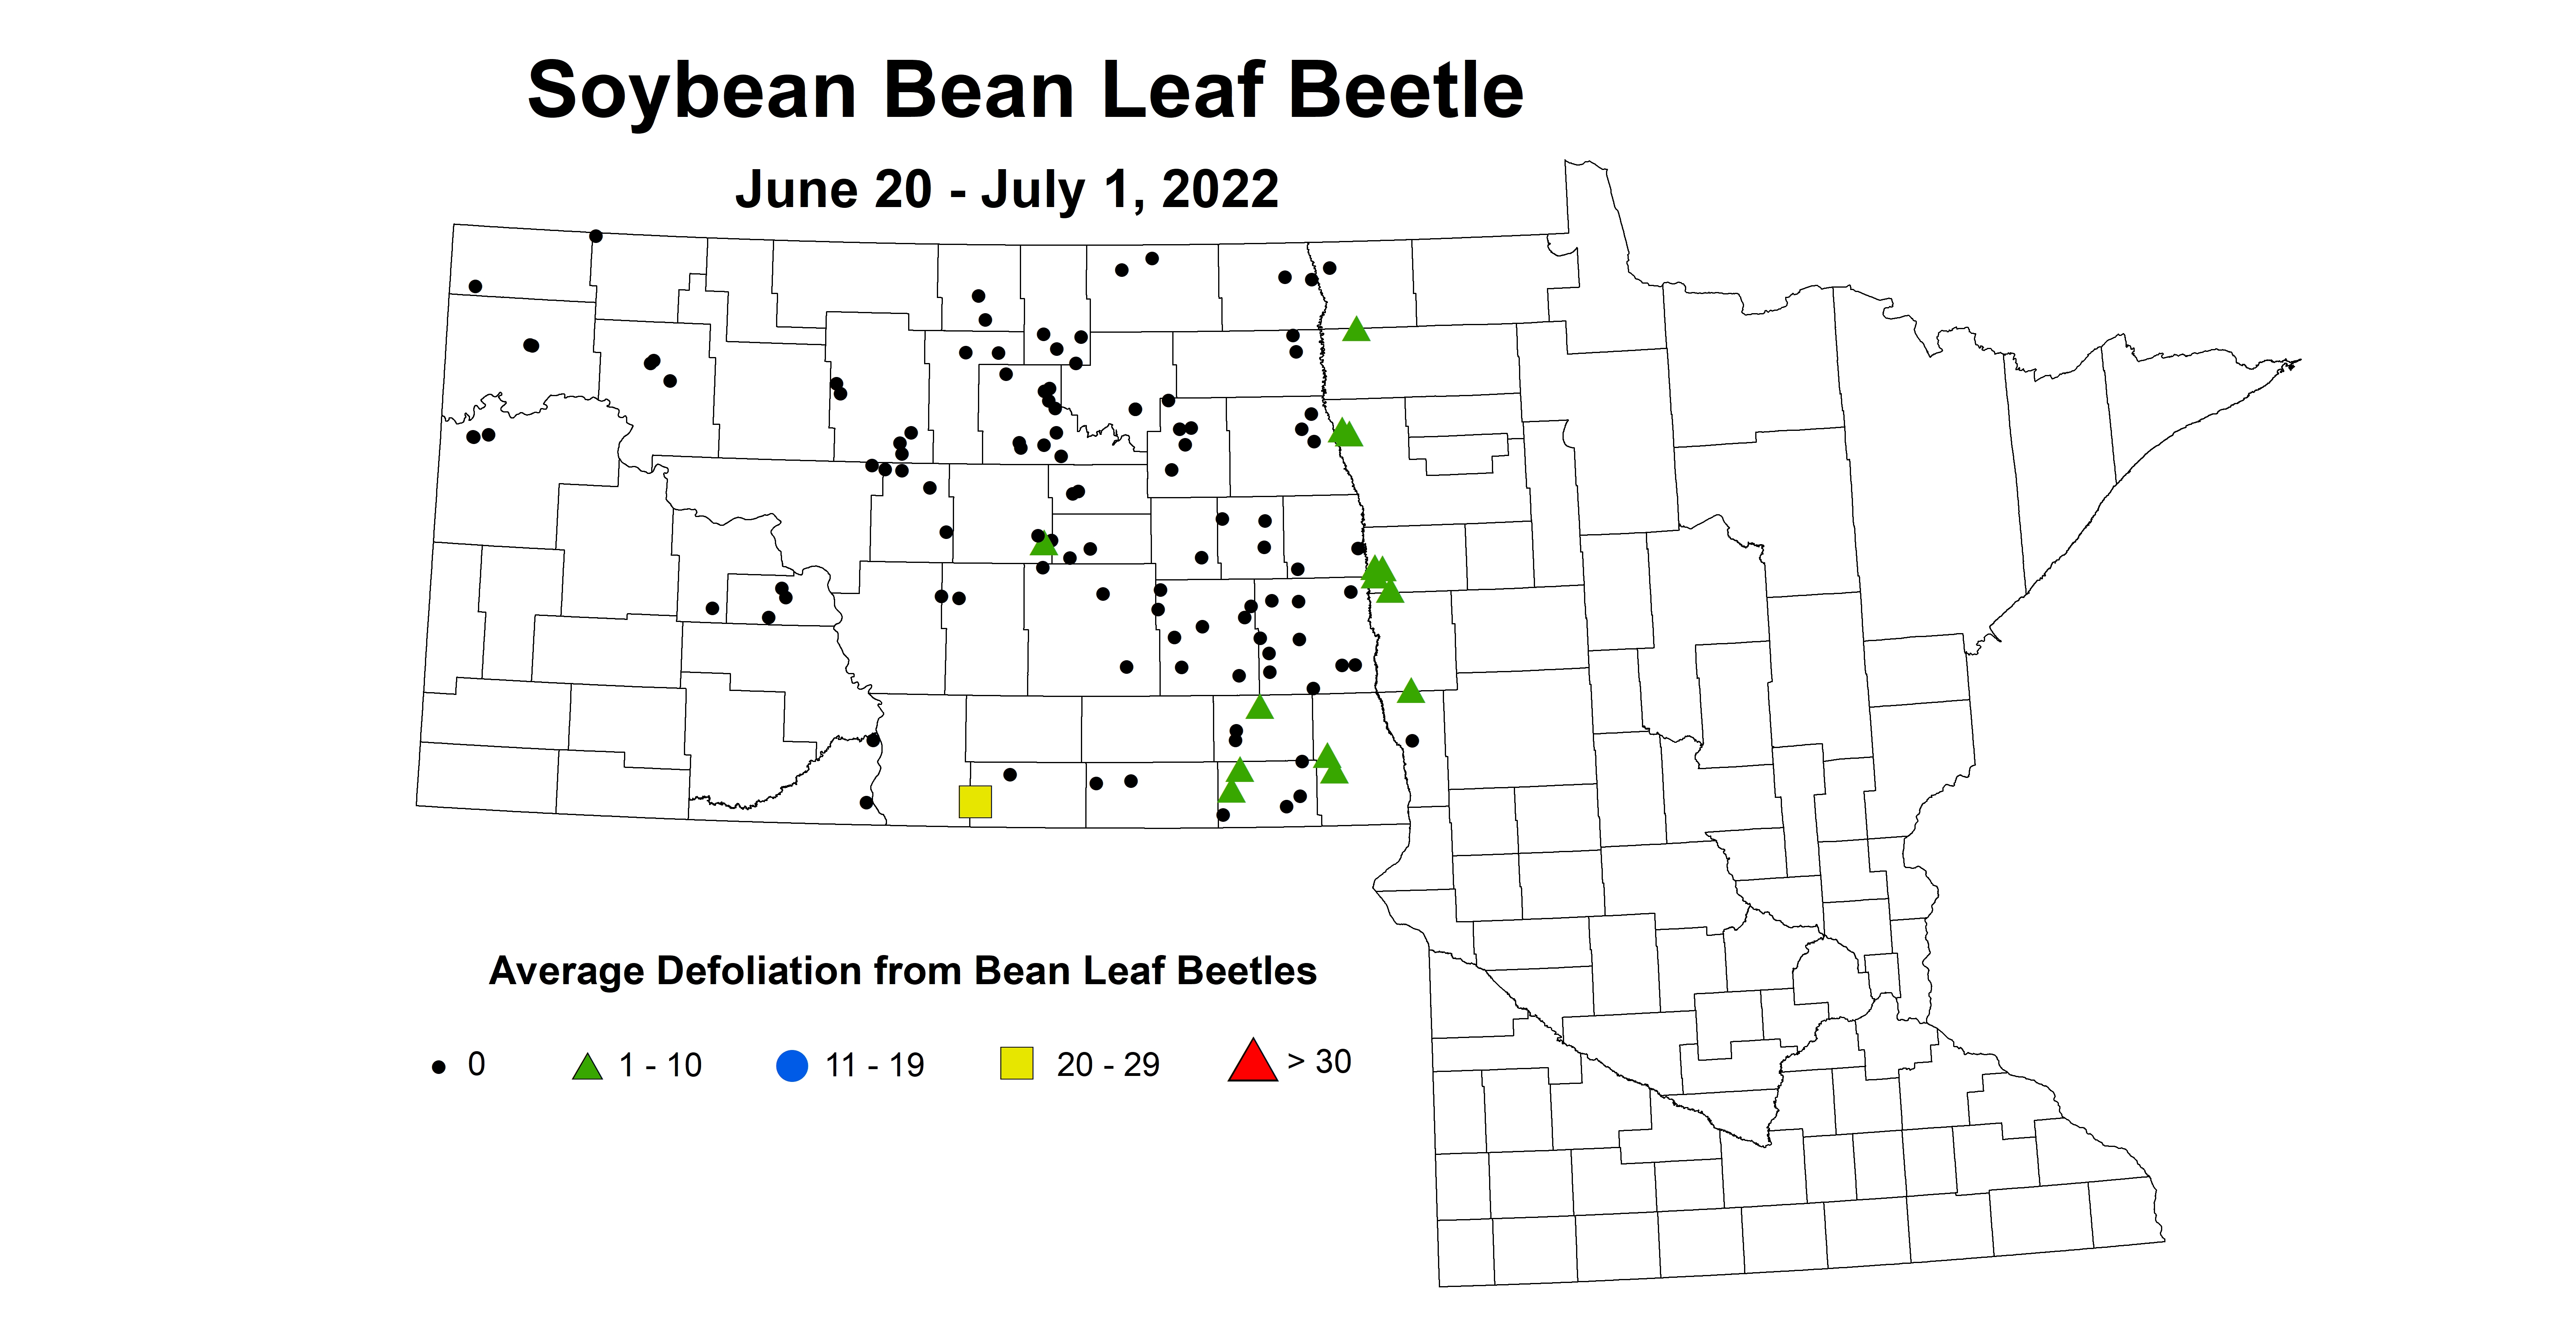 ND IPM map of soybean bean leaf beetle average defoliation June 20 - July 1 2022